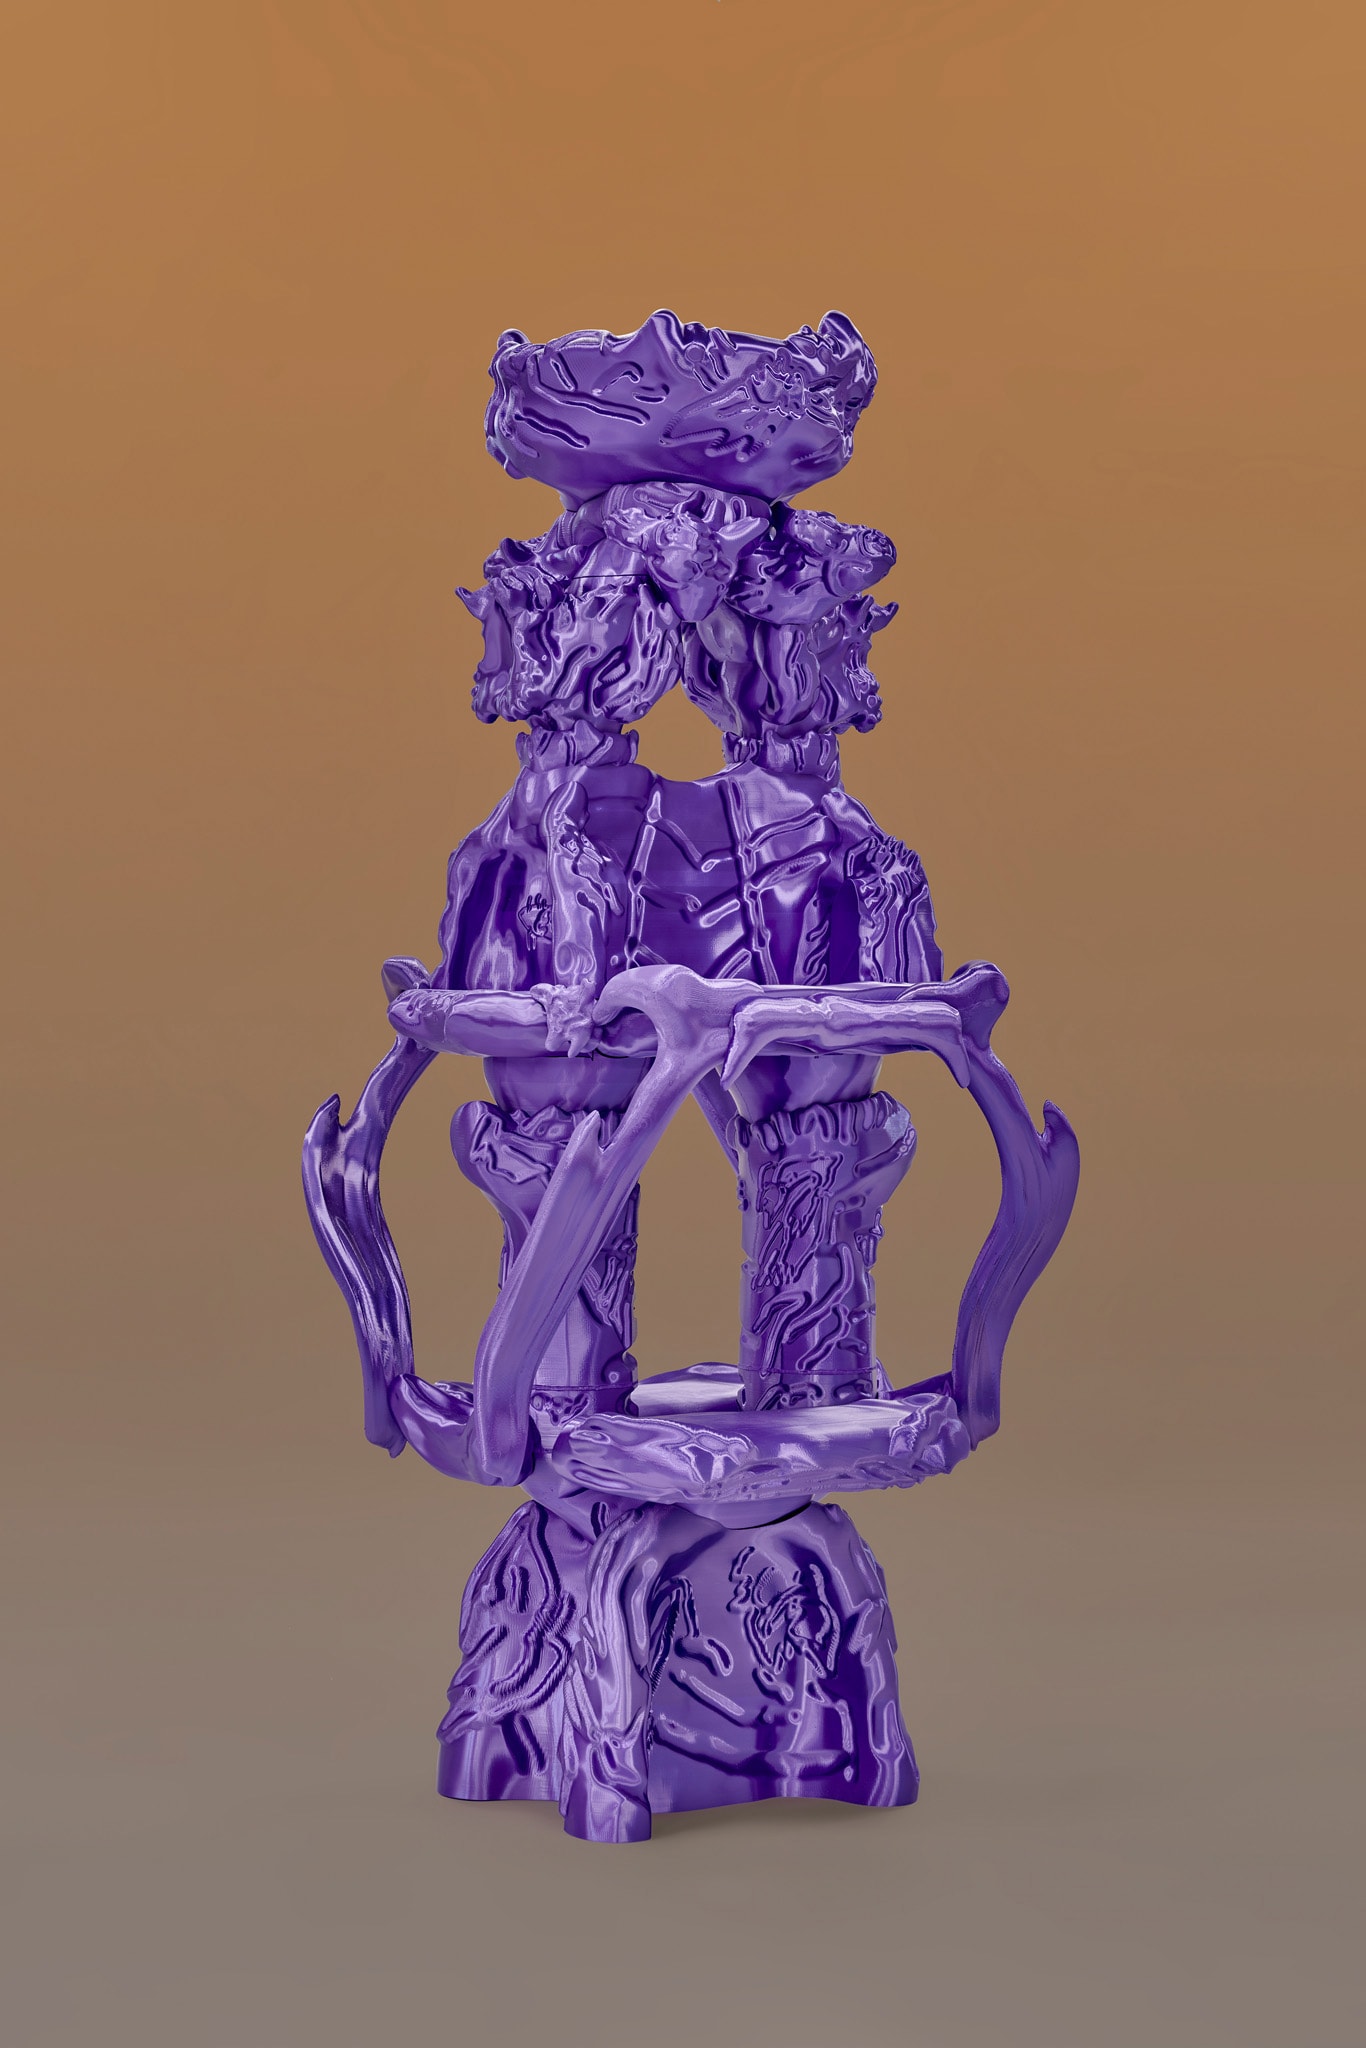 Meta (tower) Shelve, in Pla stampata 3D, Audrey Large per NILUFAR GALLERY (edizione limitata di 7 pezzi + 2 pa, 30.870 €). ©Studio Pim Top.